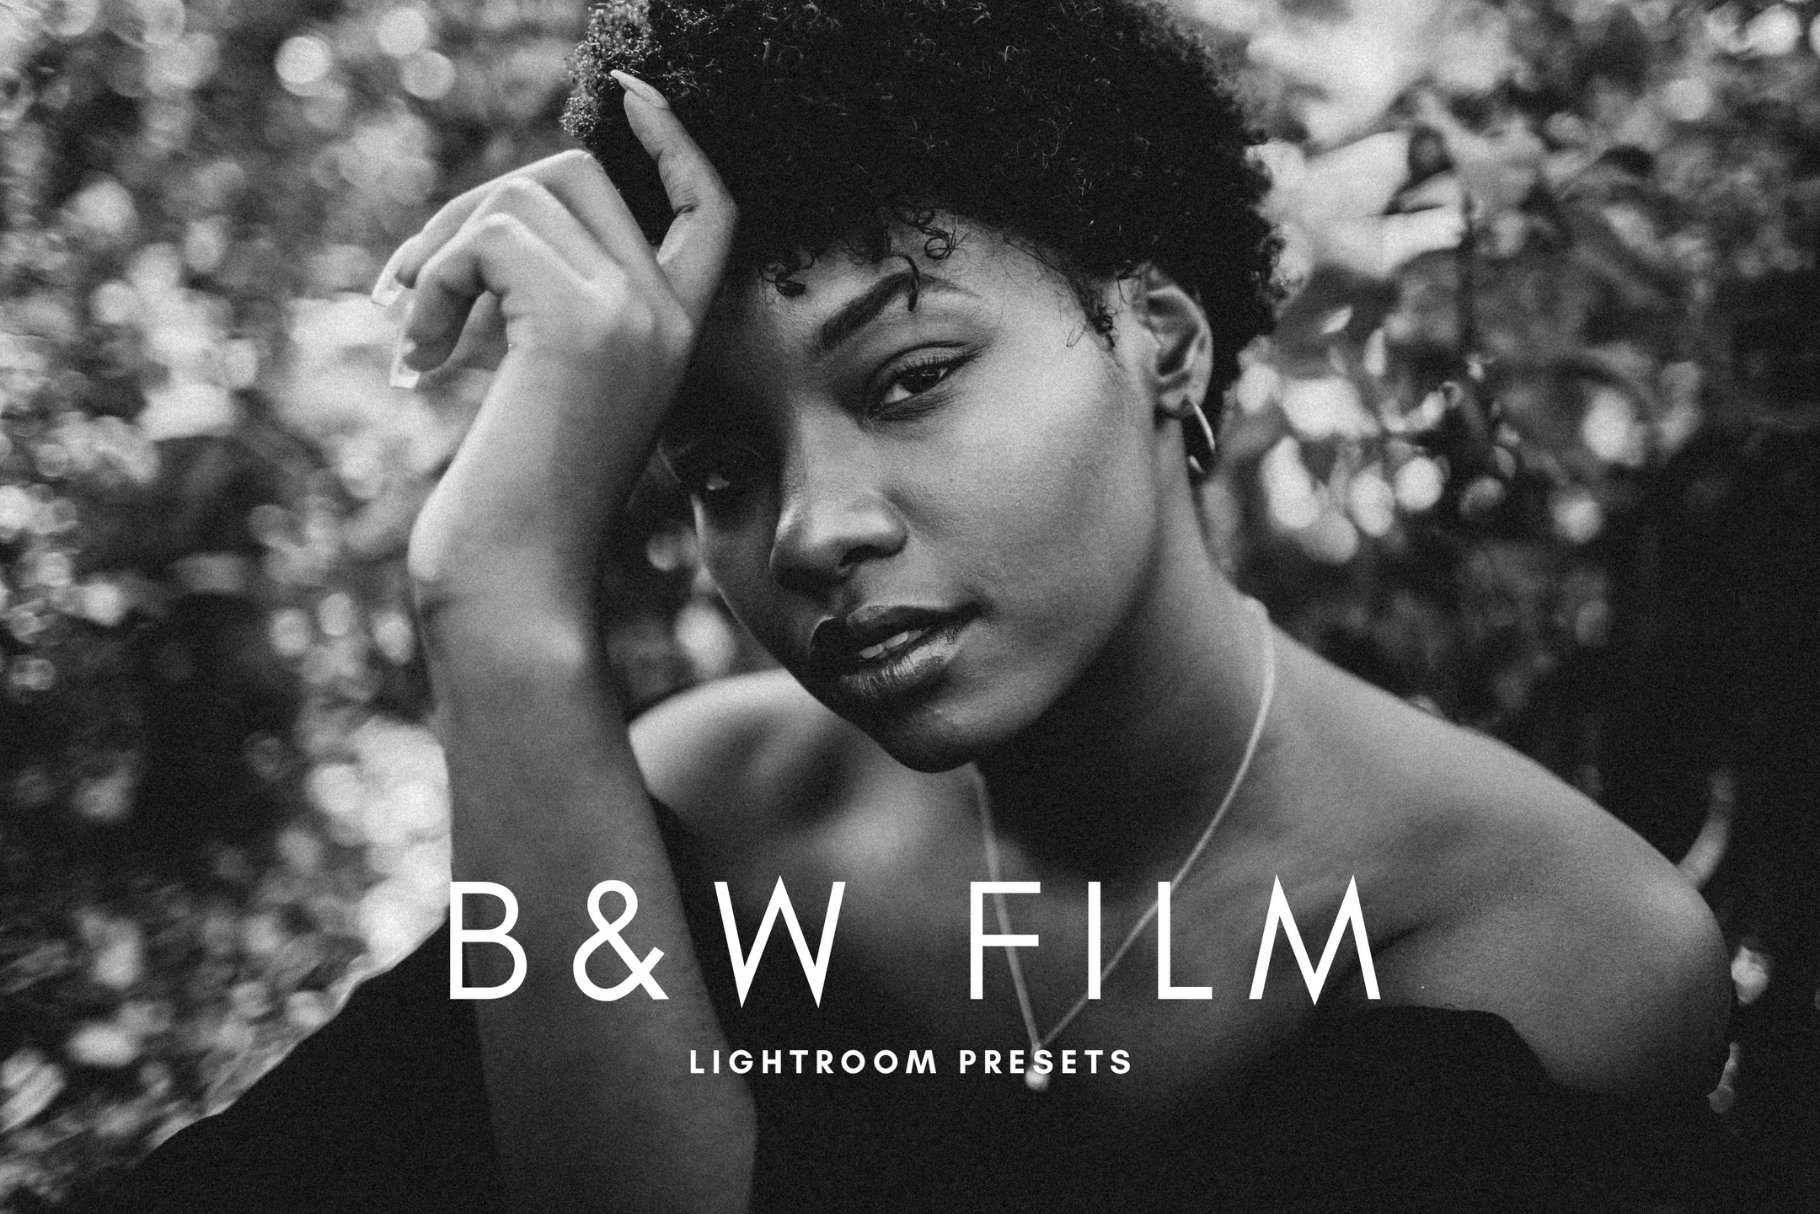 B&W Film Presets For Lightroomcover image.